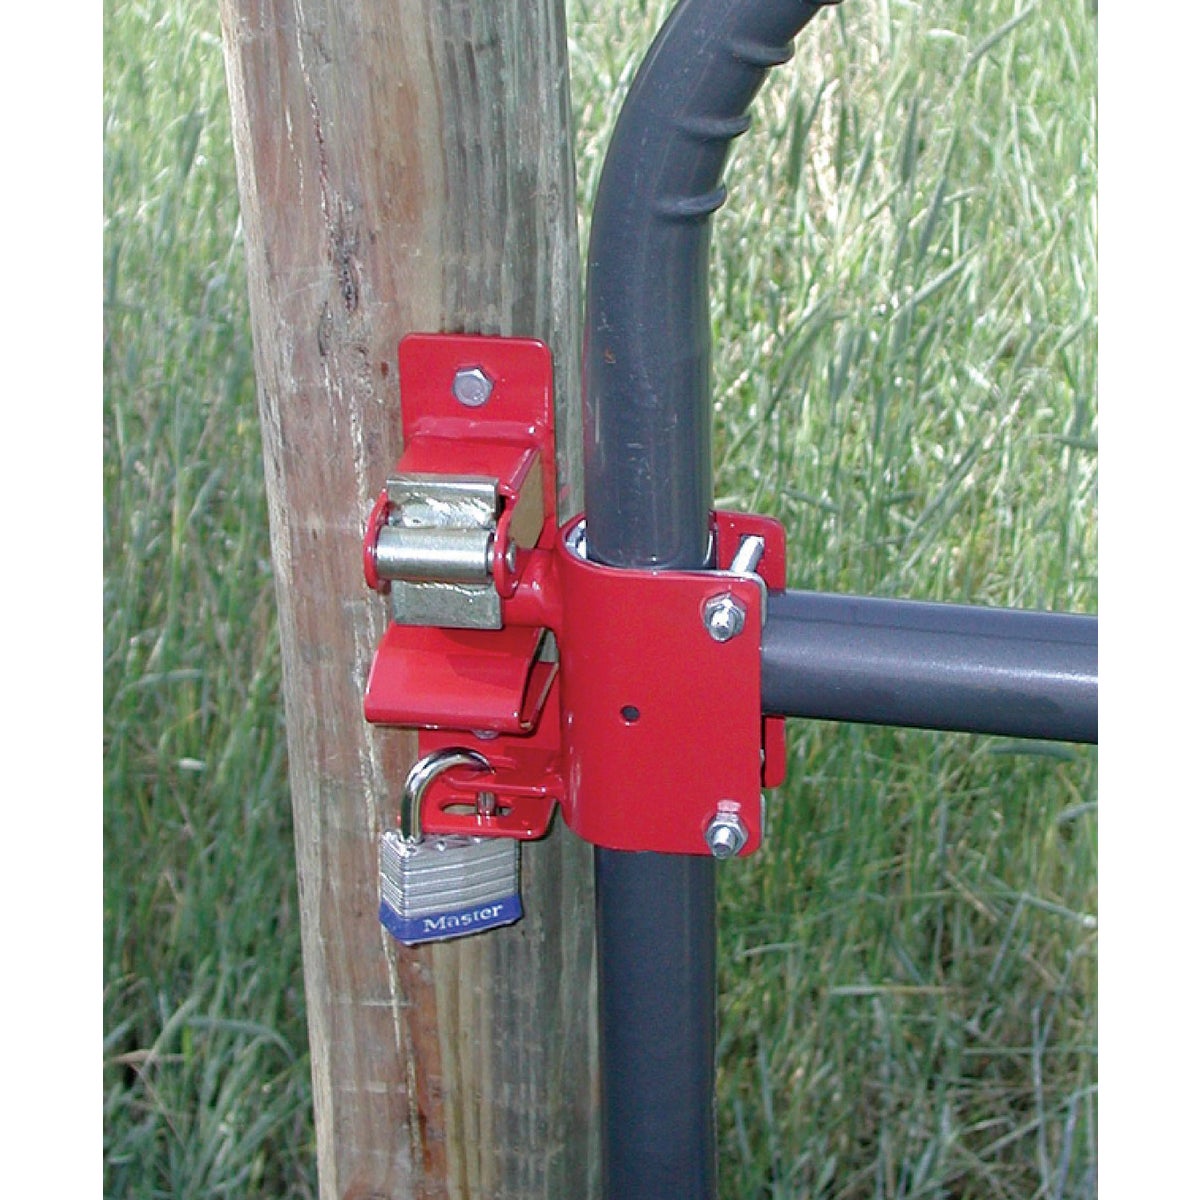 Item 759816, 1-way lockable gate latch; designed to accept padlock; round tube gates 1-5